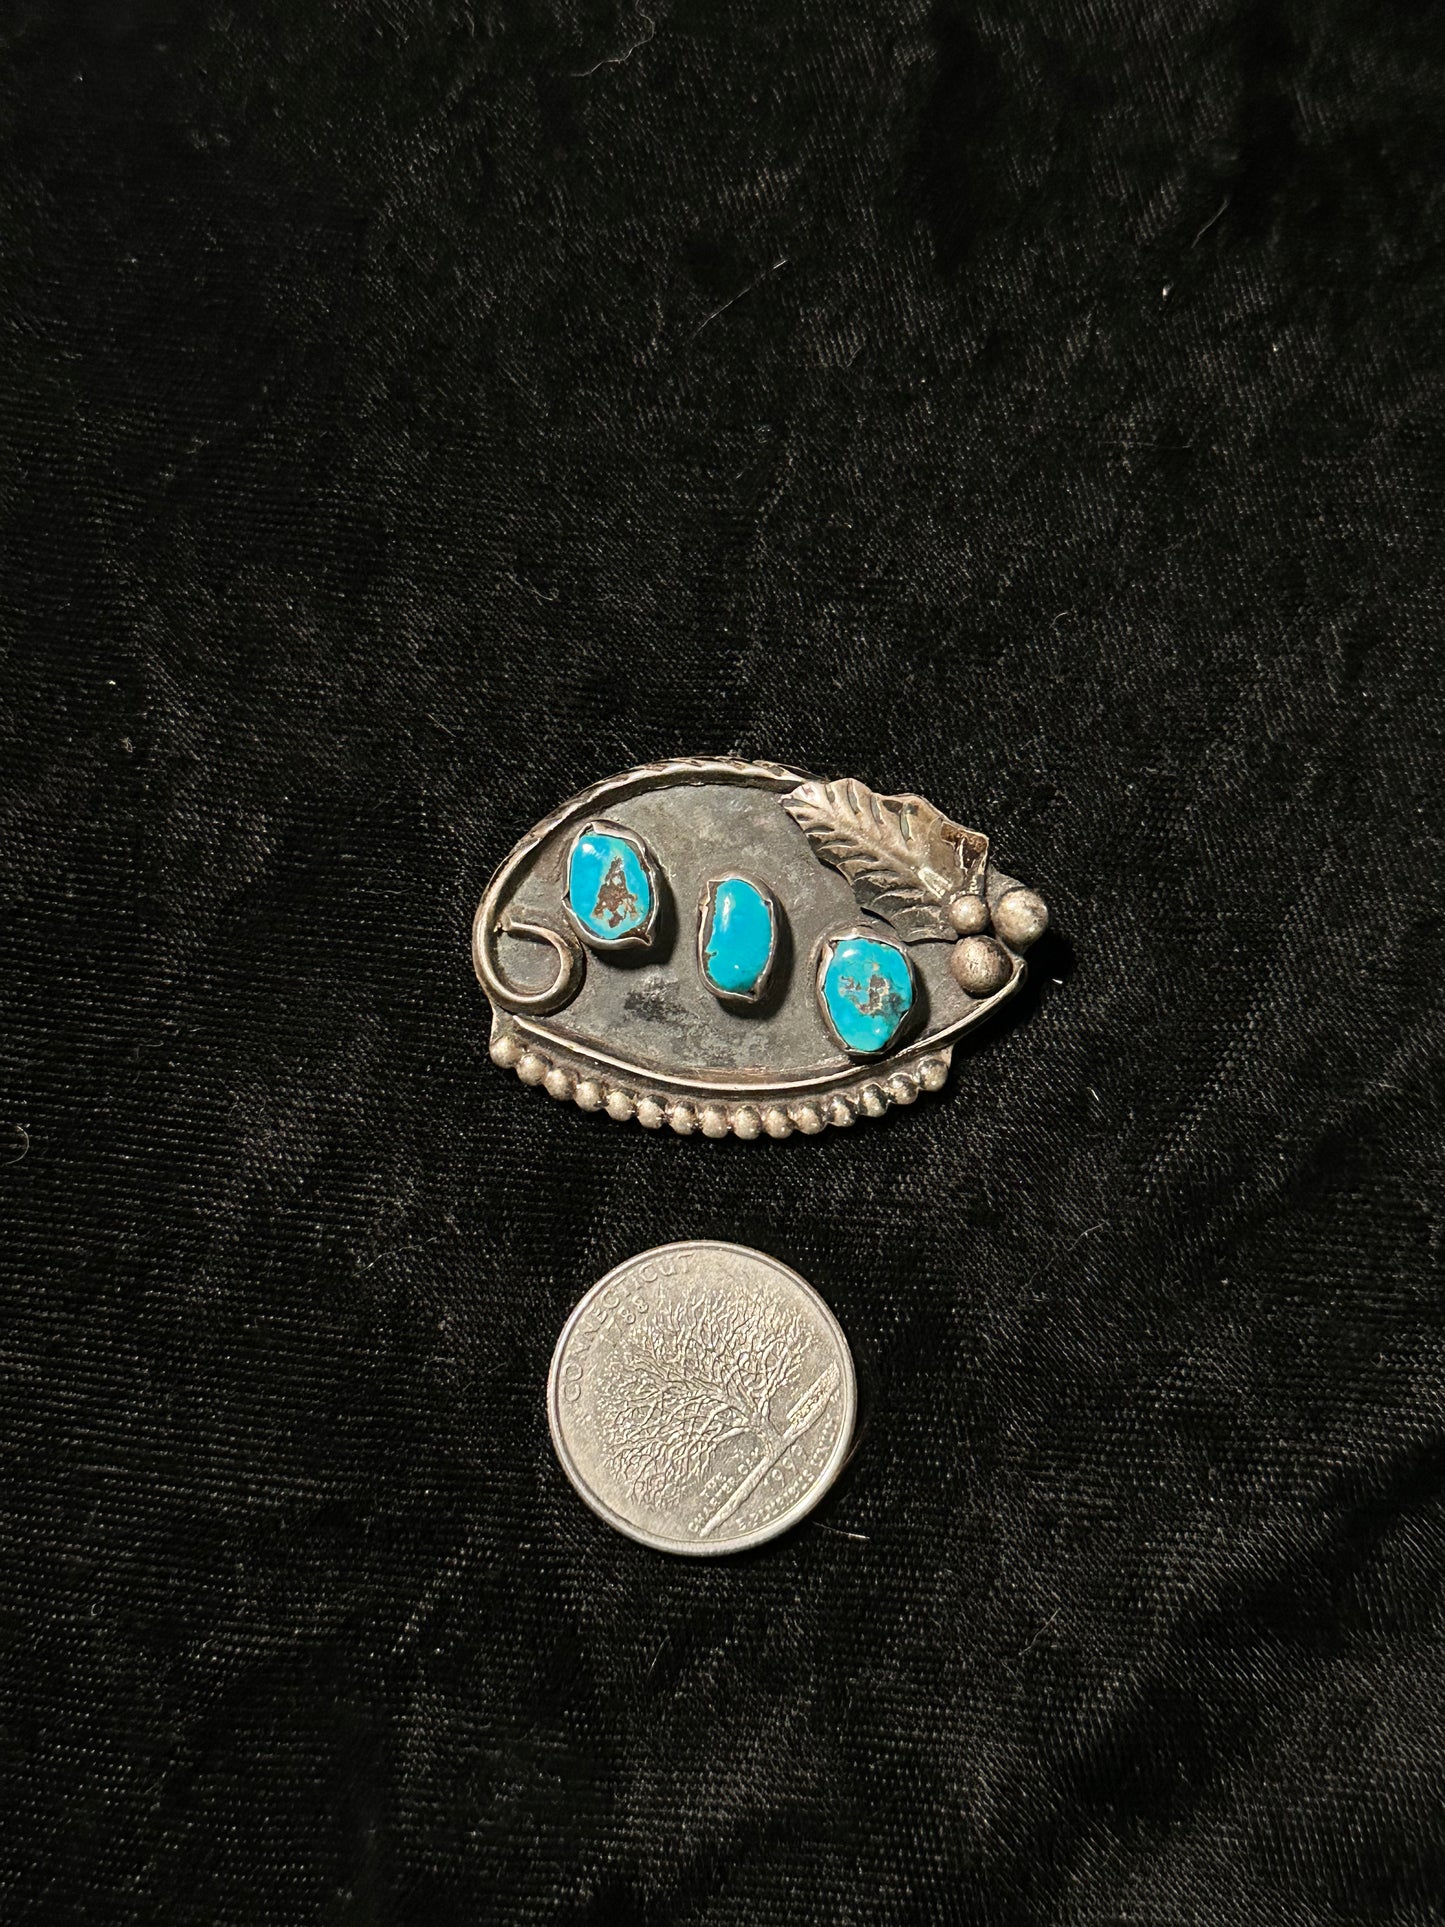 Vintage Kingman Turquoise Pin by Louise Platero